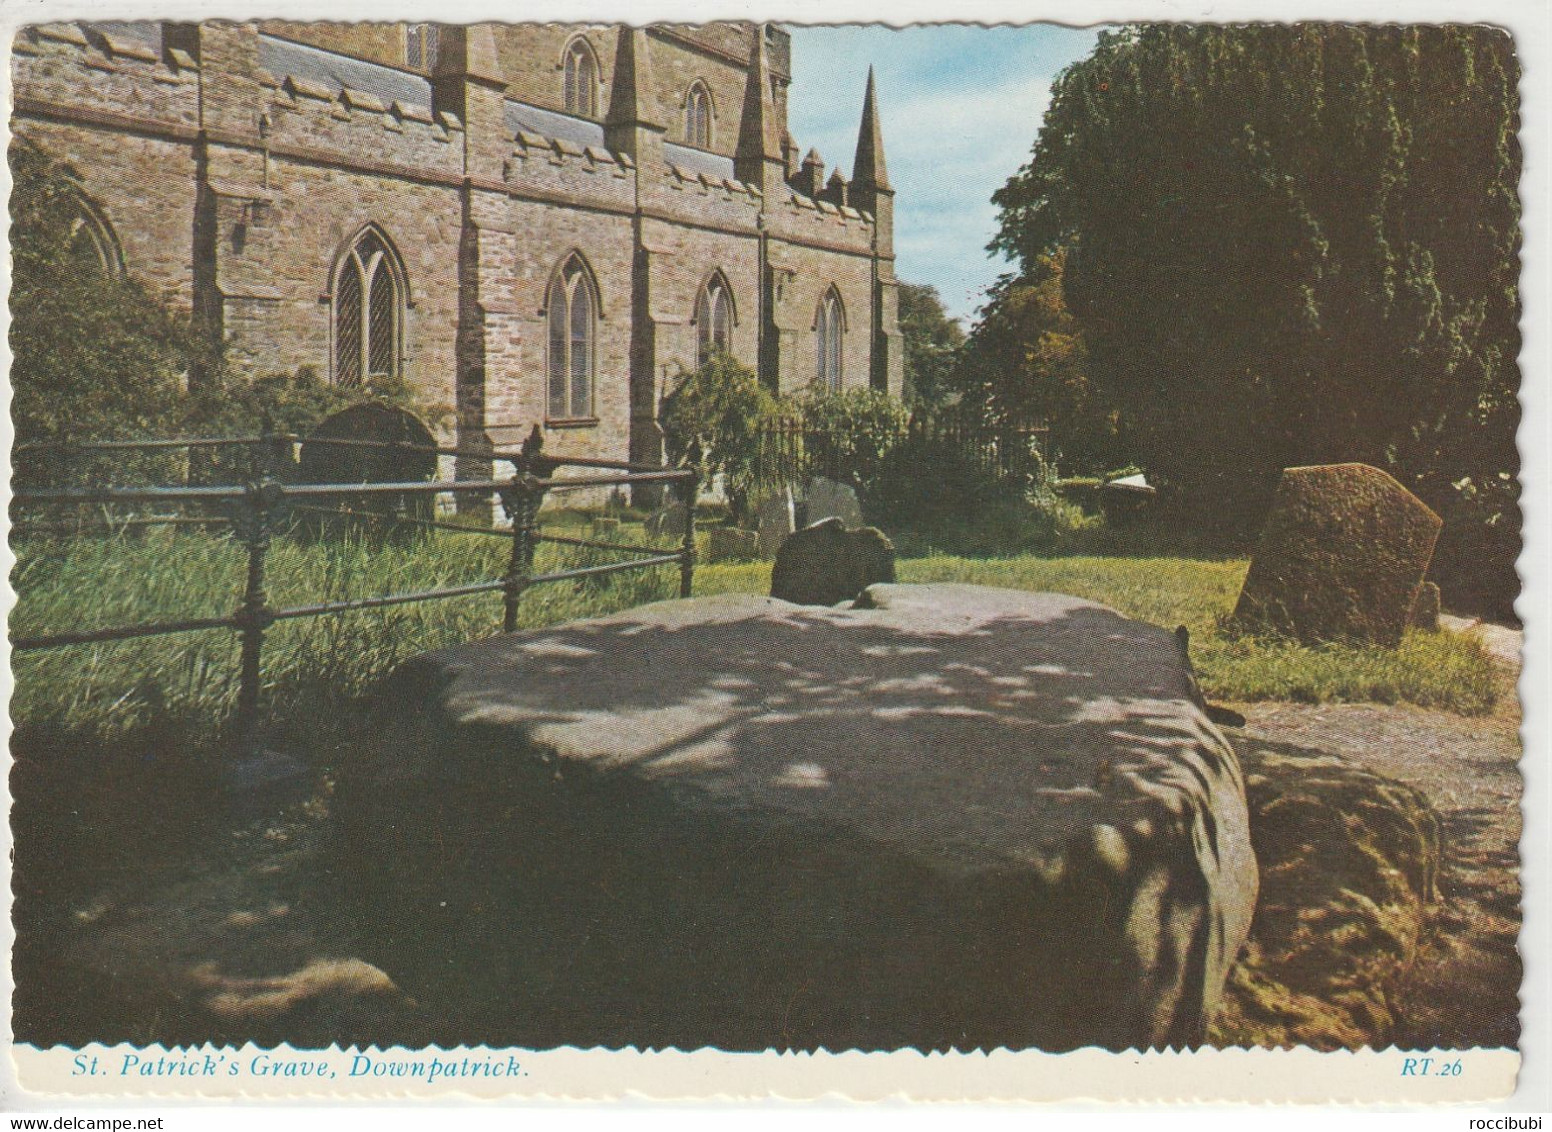 Downpatrick, St. Patrick's Grave - Down